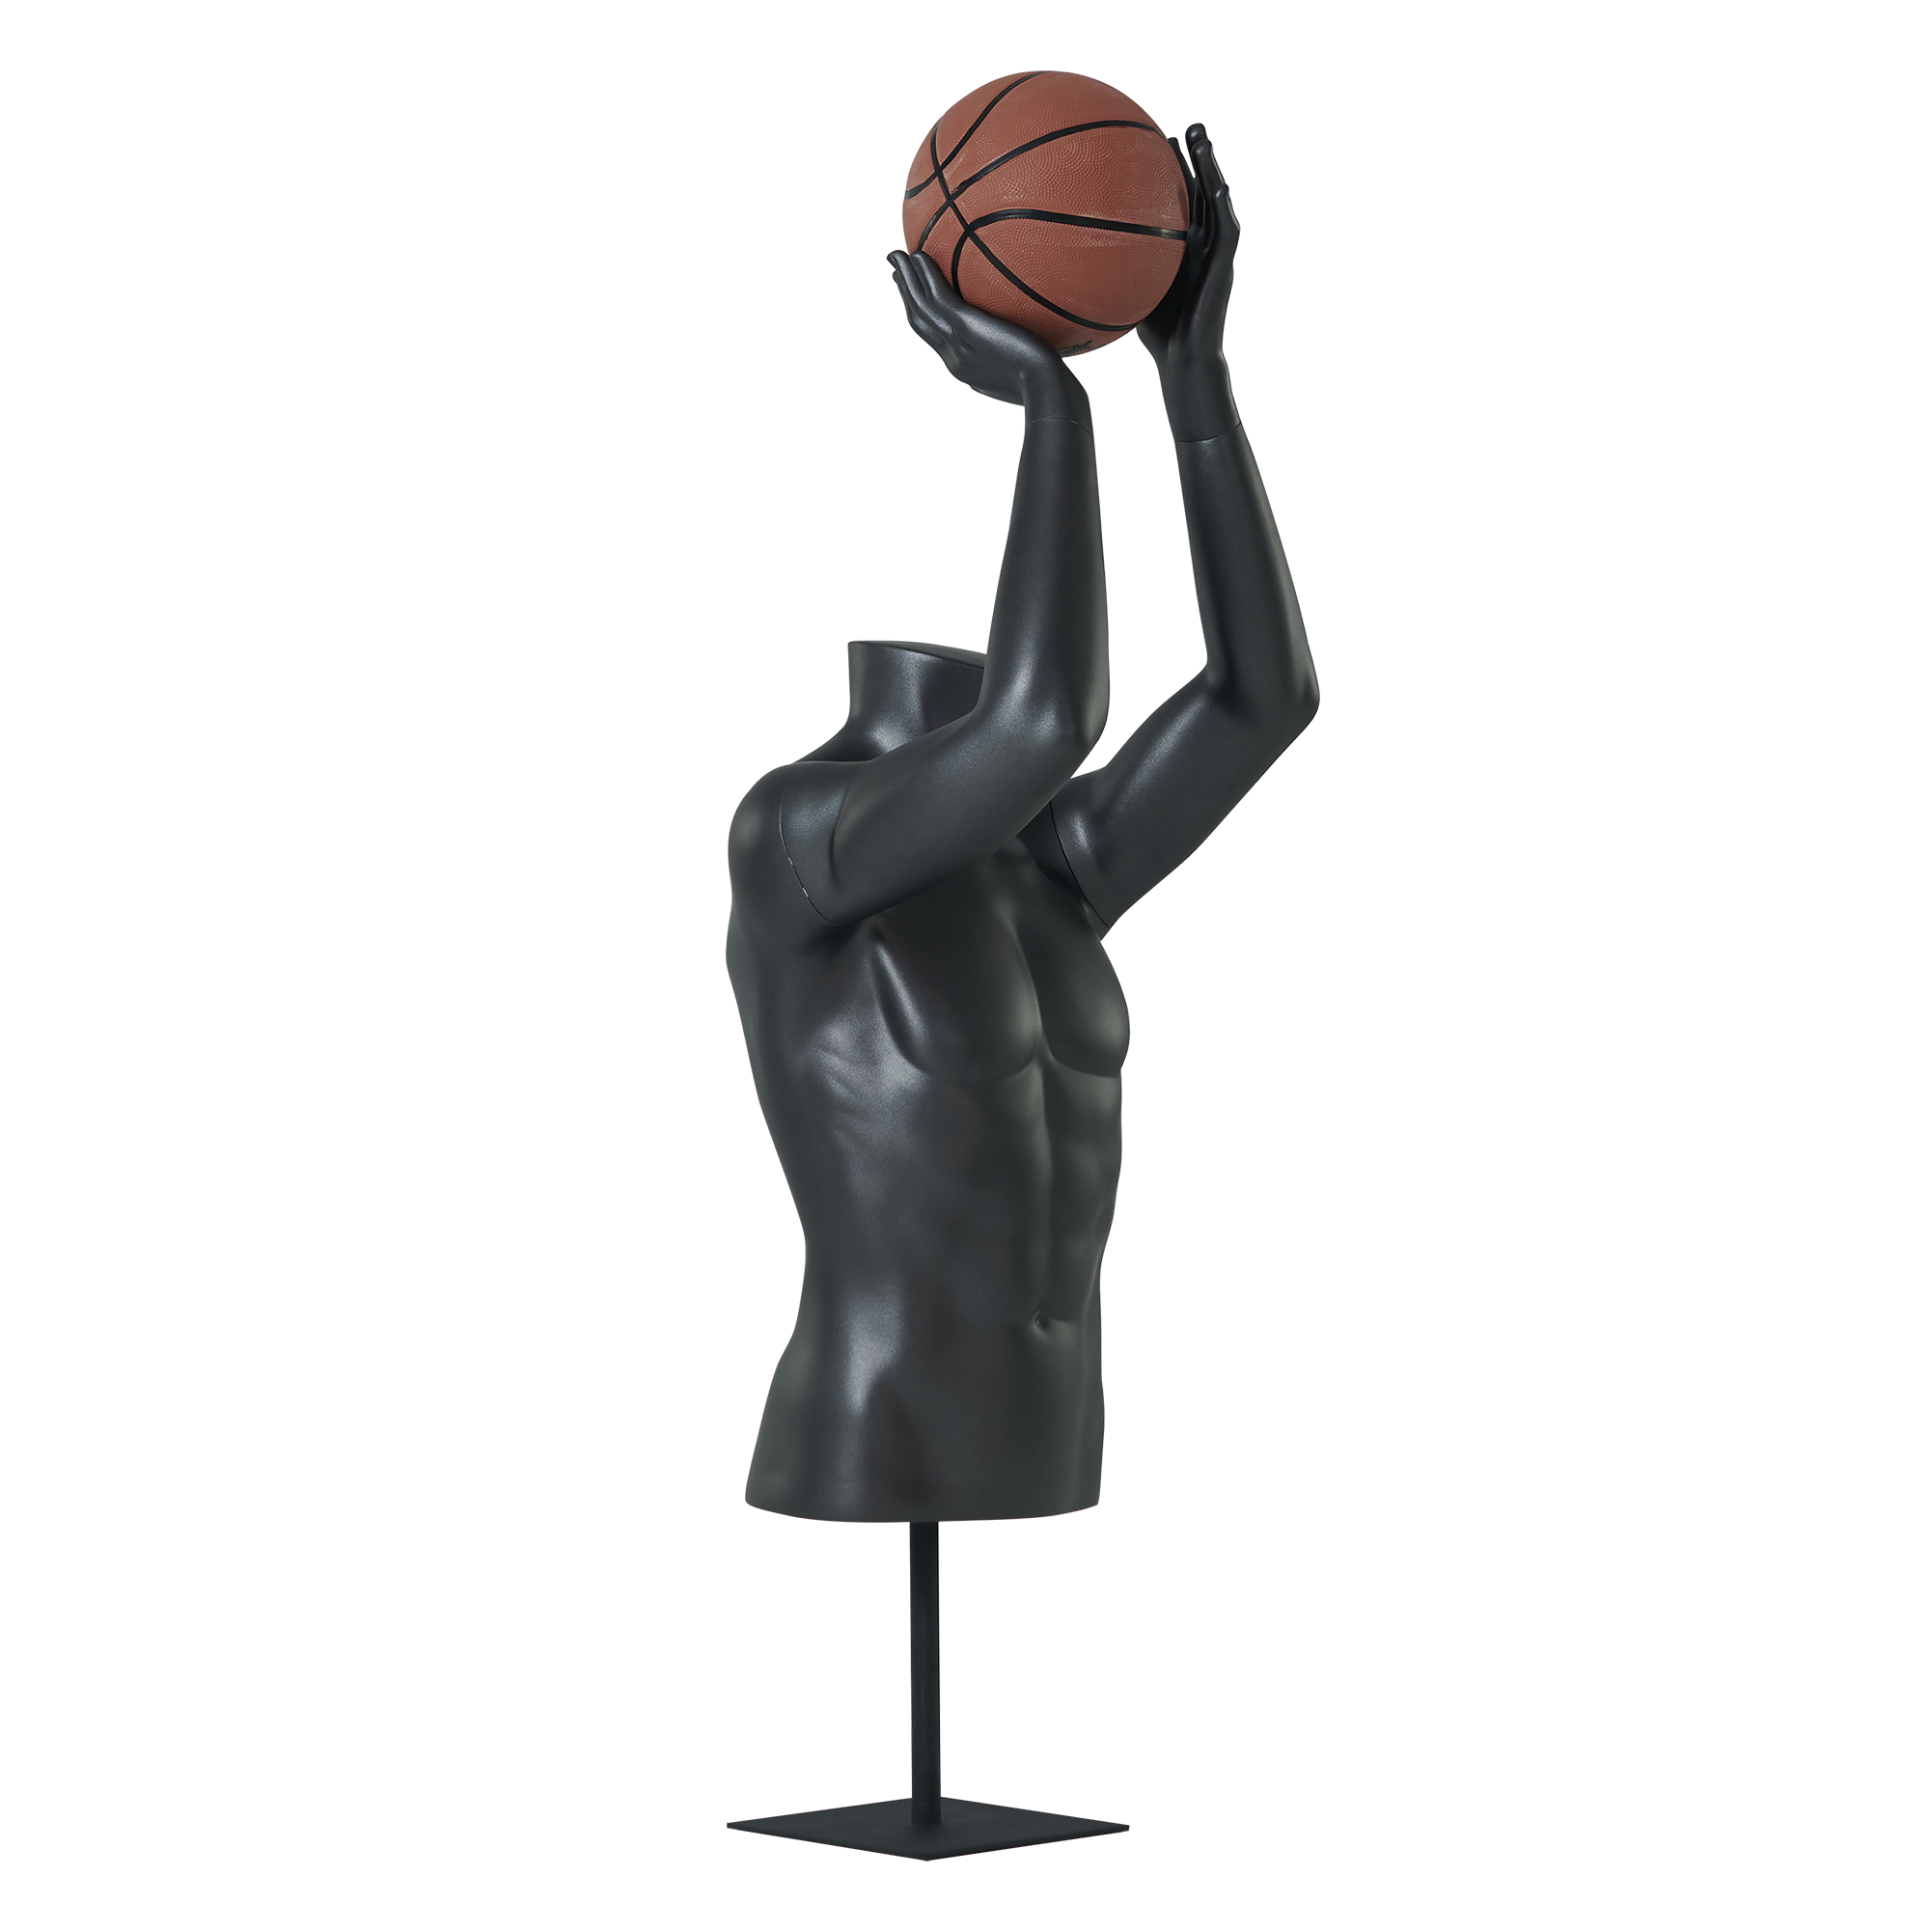 Acheter Mannequin de basket-ball masculin du haut du torse,Mannequin de basket-ball masculin du haut du torse Prix,Mannequin de basket-ball masculin du haut du torse Marques,Mannequin de basket-ball masculin du haut du torse Fabricant,Mannequin de basket-ball masculin du haut du torse Quotes,Mannequin de basket-ball masculin du haut du torse Société,